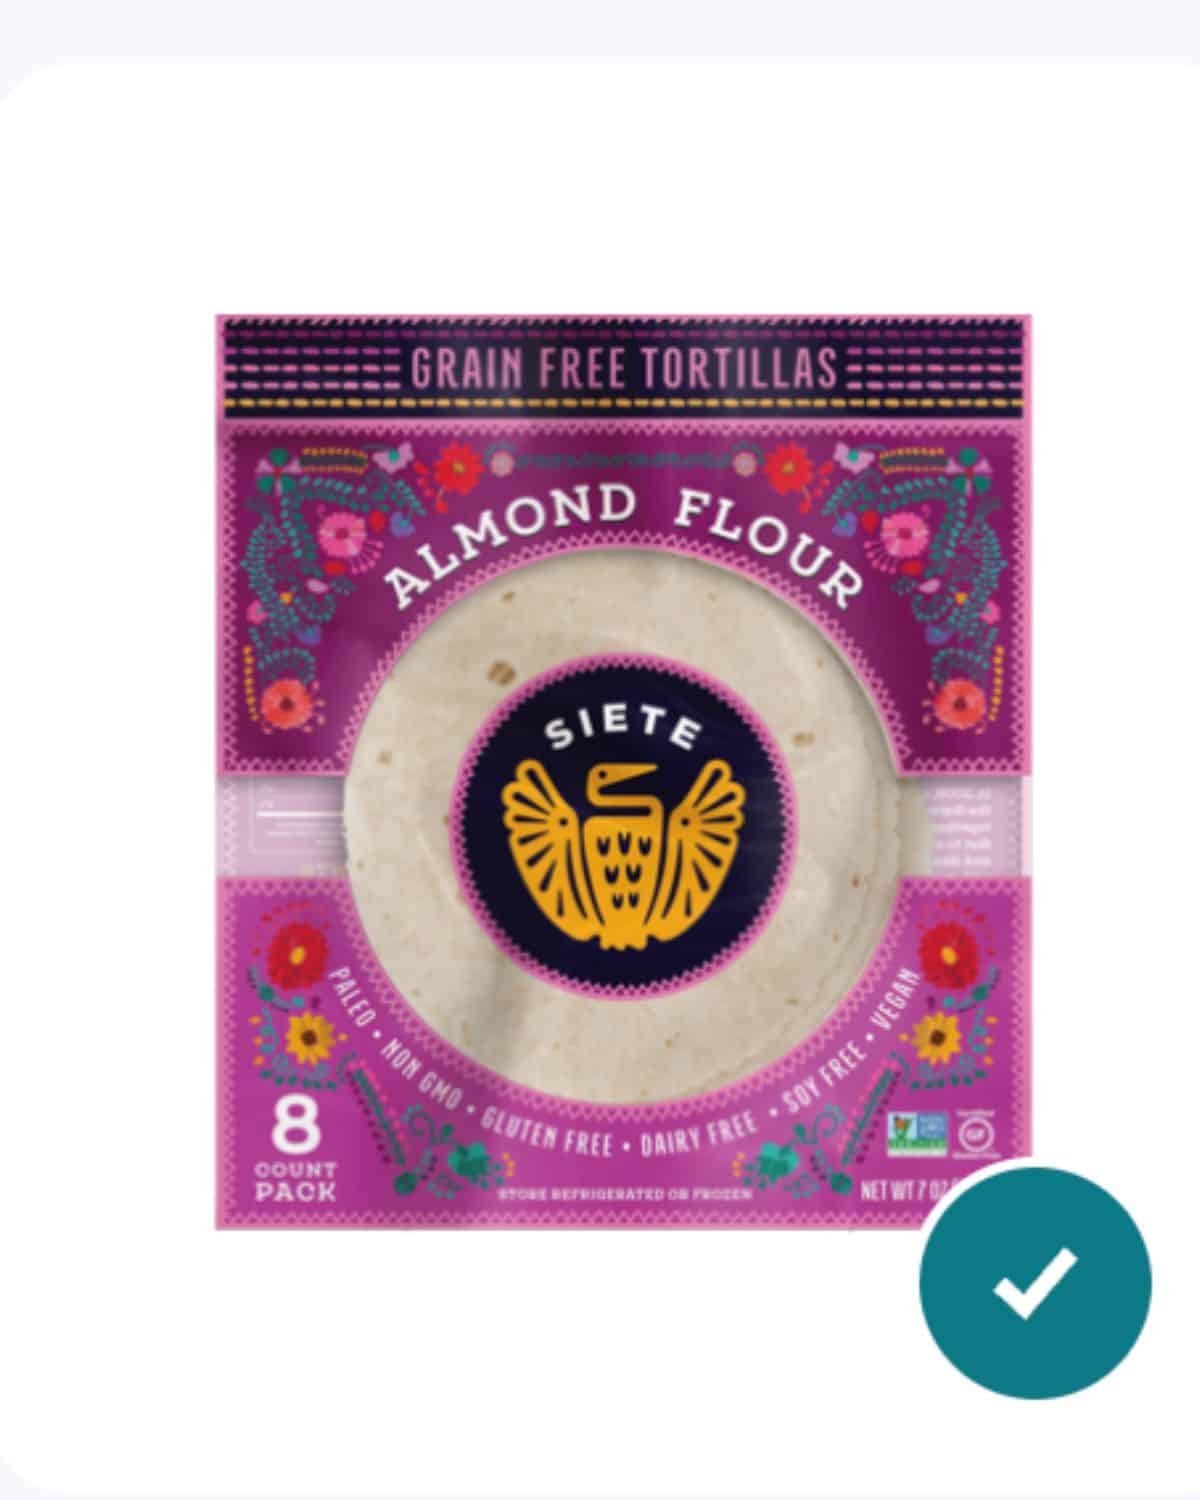 Siete Foods Almond Flour Tortillas.